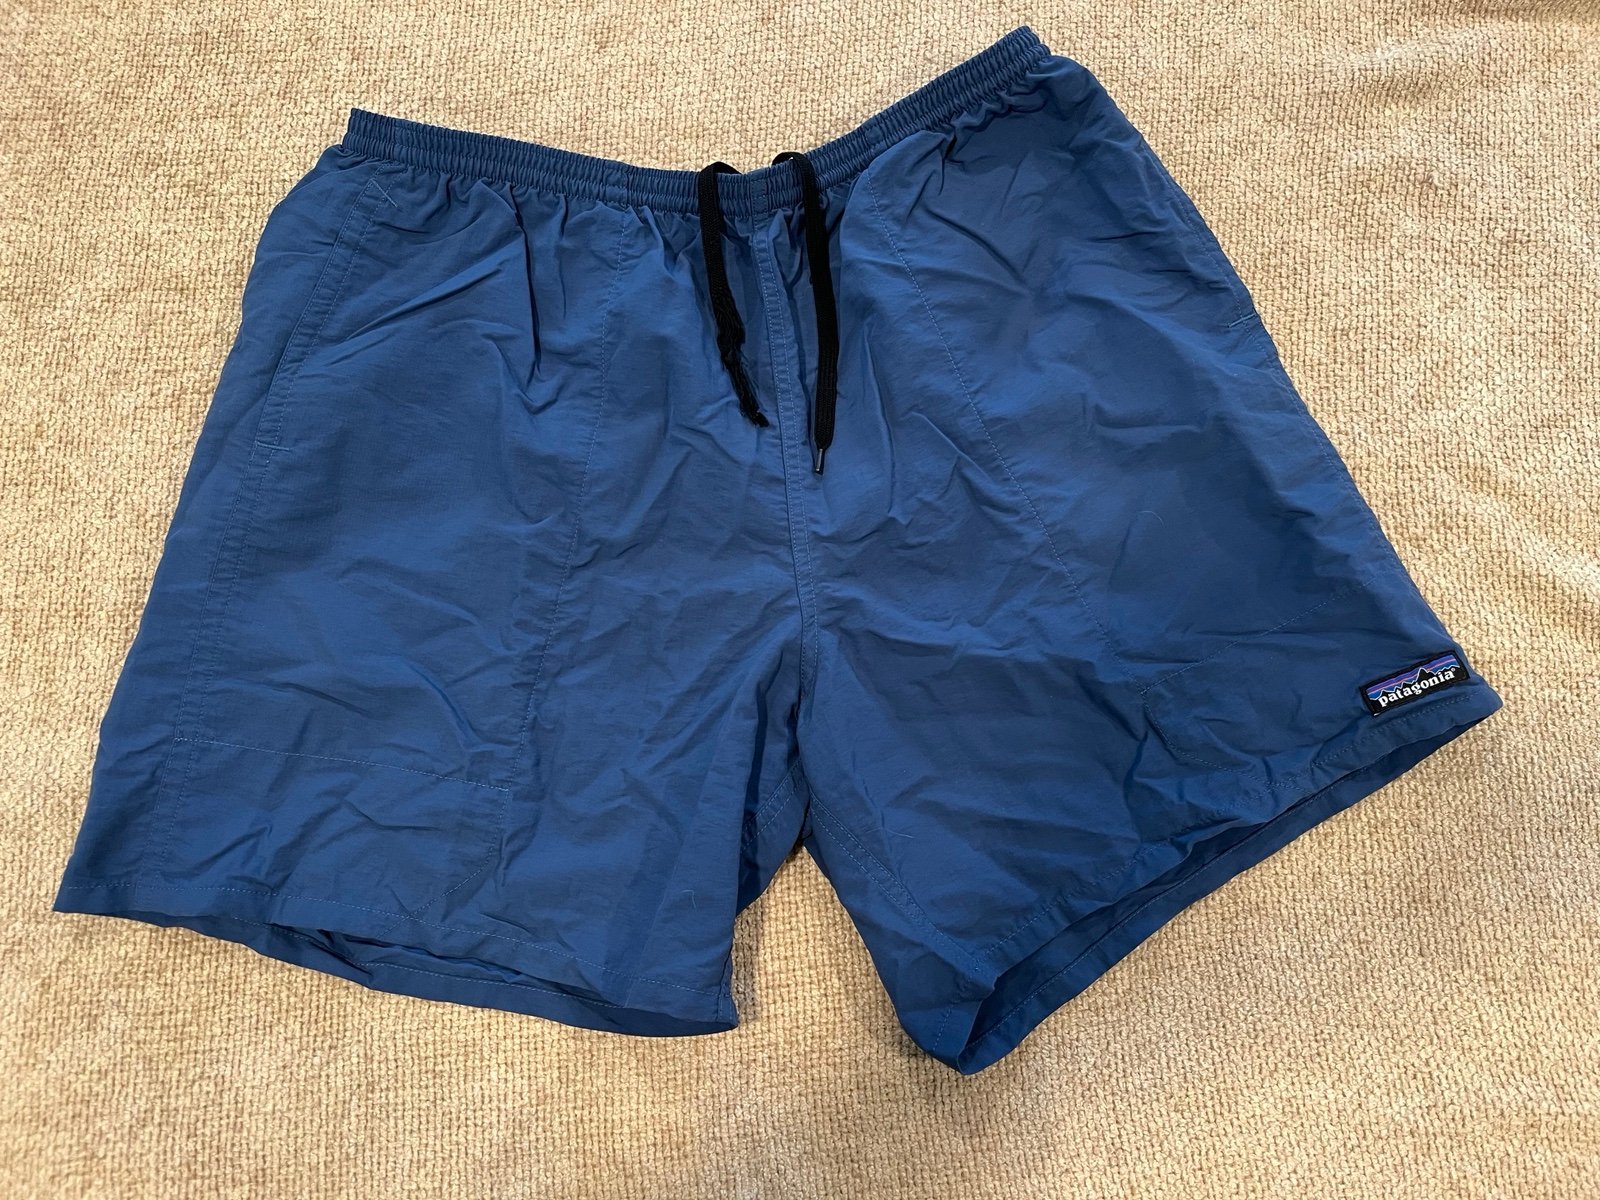 Patagonia Baggies Shorts Men’s XL Navy Mesh Lined Nylon Shorts Swim Trunks iG77wGybe